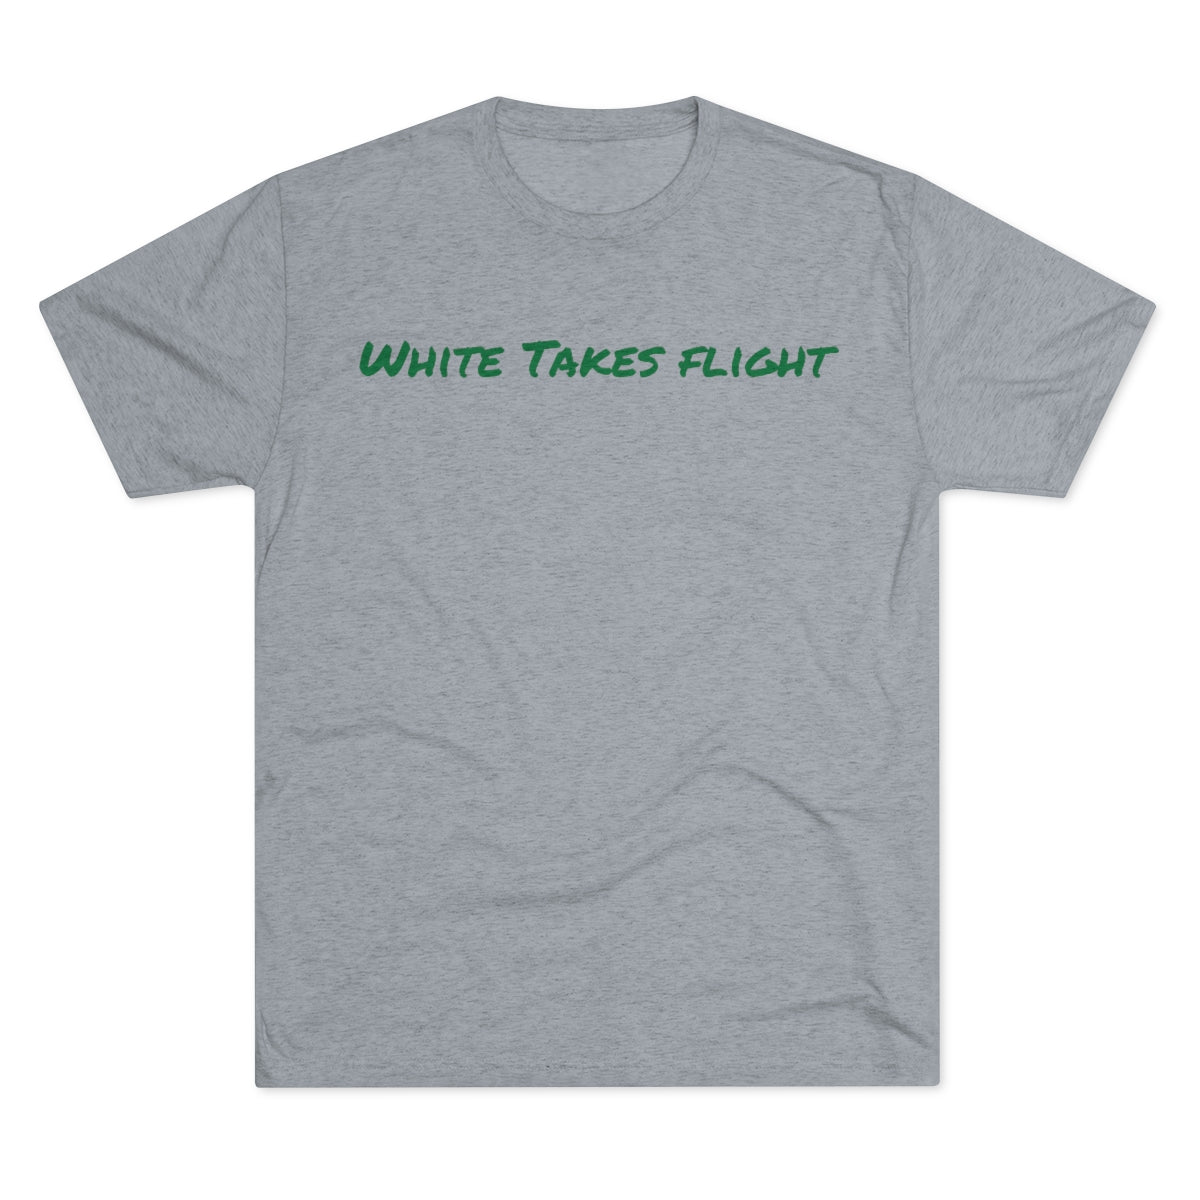 White Takes Flight Shirt - IsGoodBrand